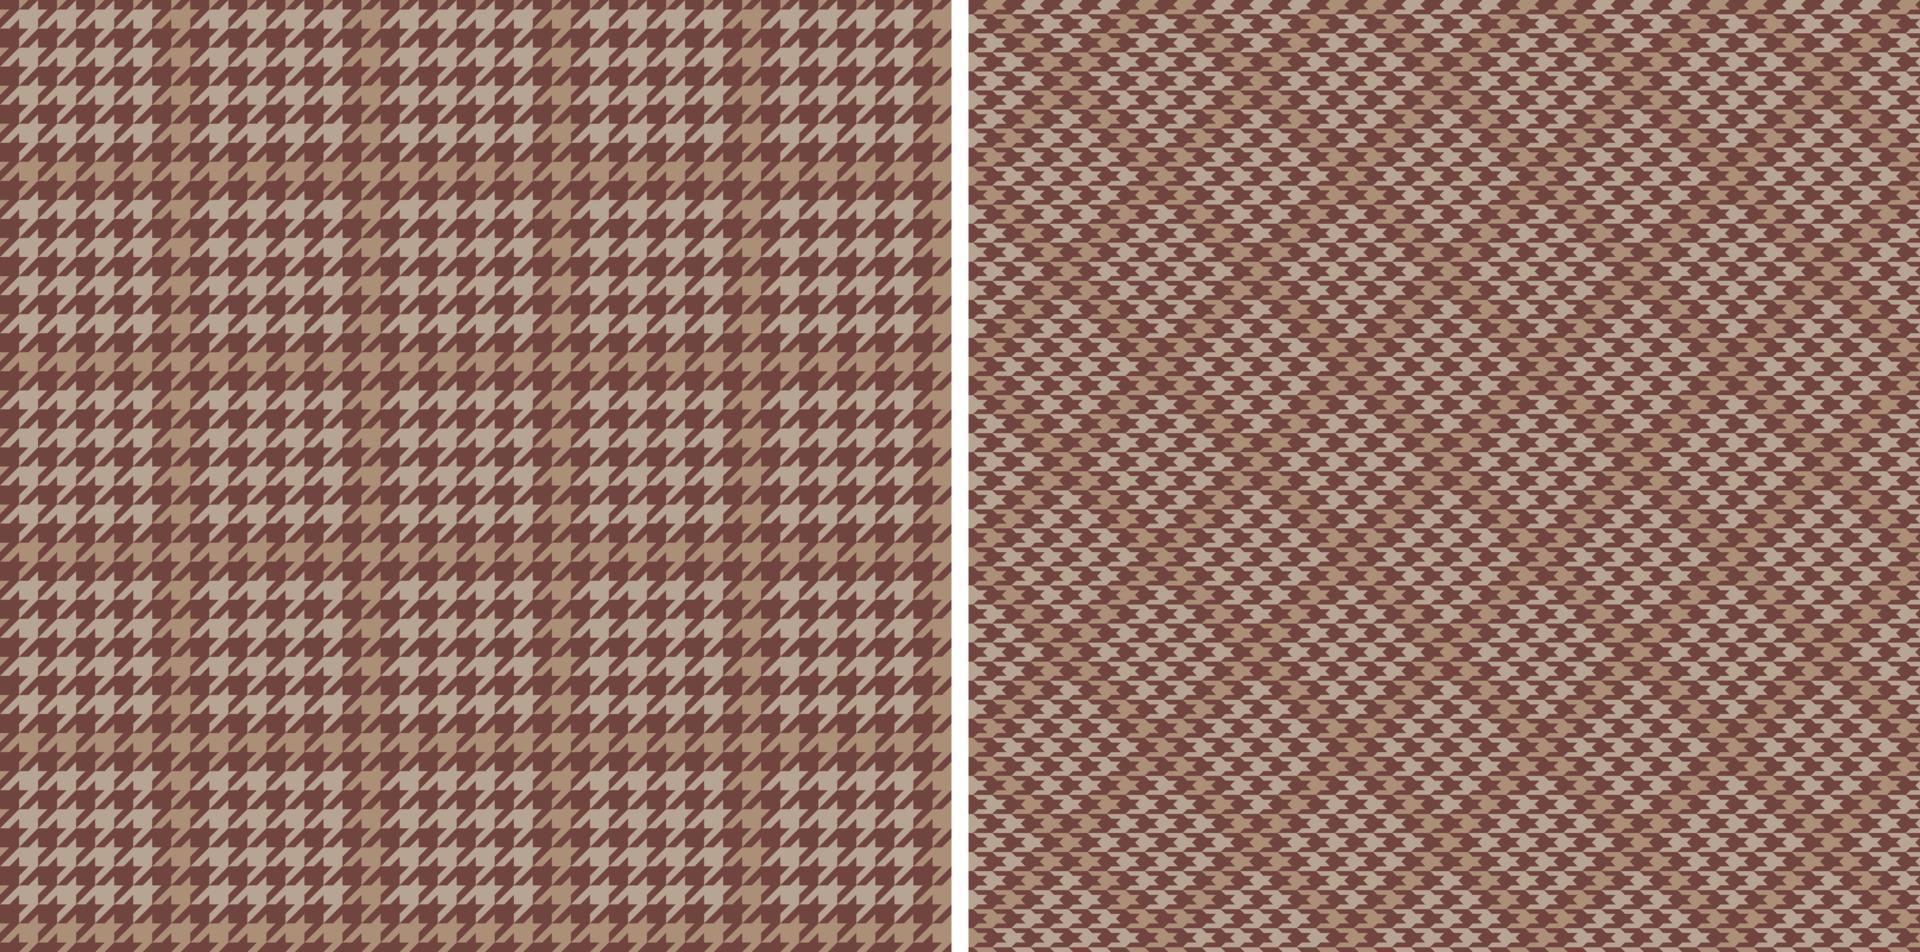 Texture fabric background. Seamless check textile. Plaid vector pattern tartan.